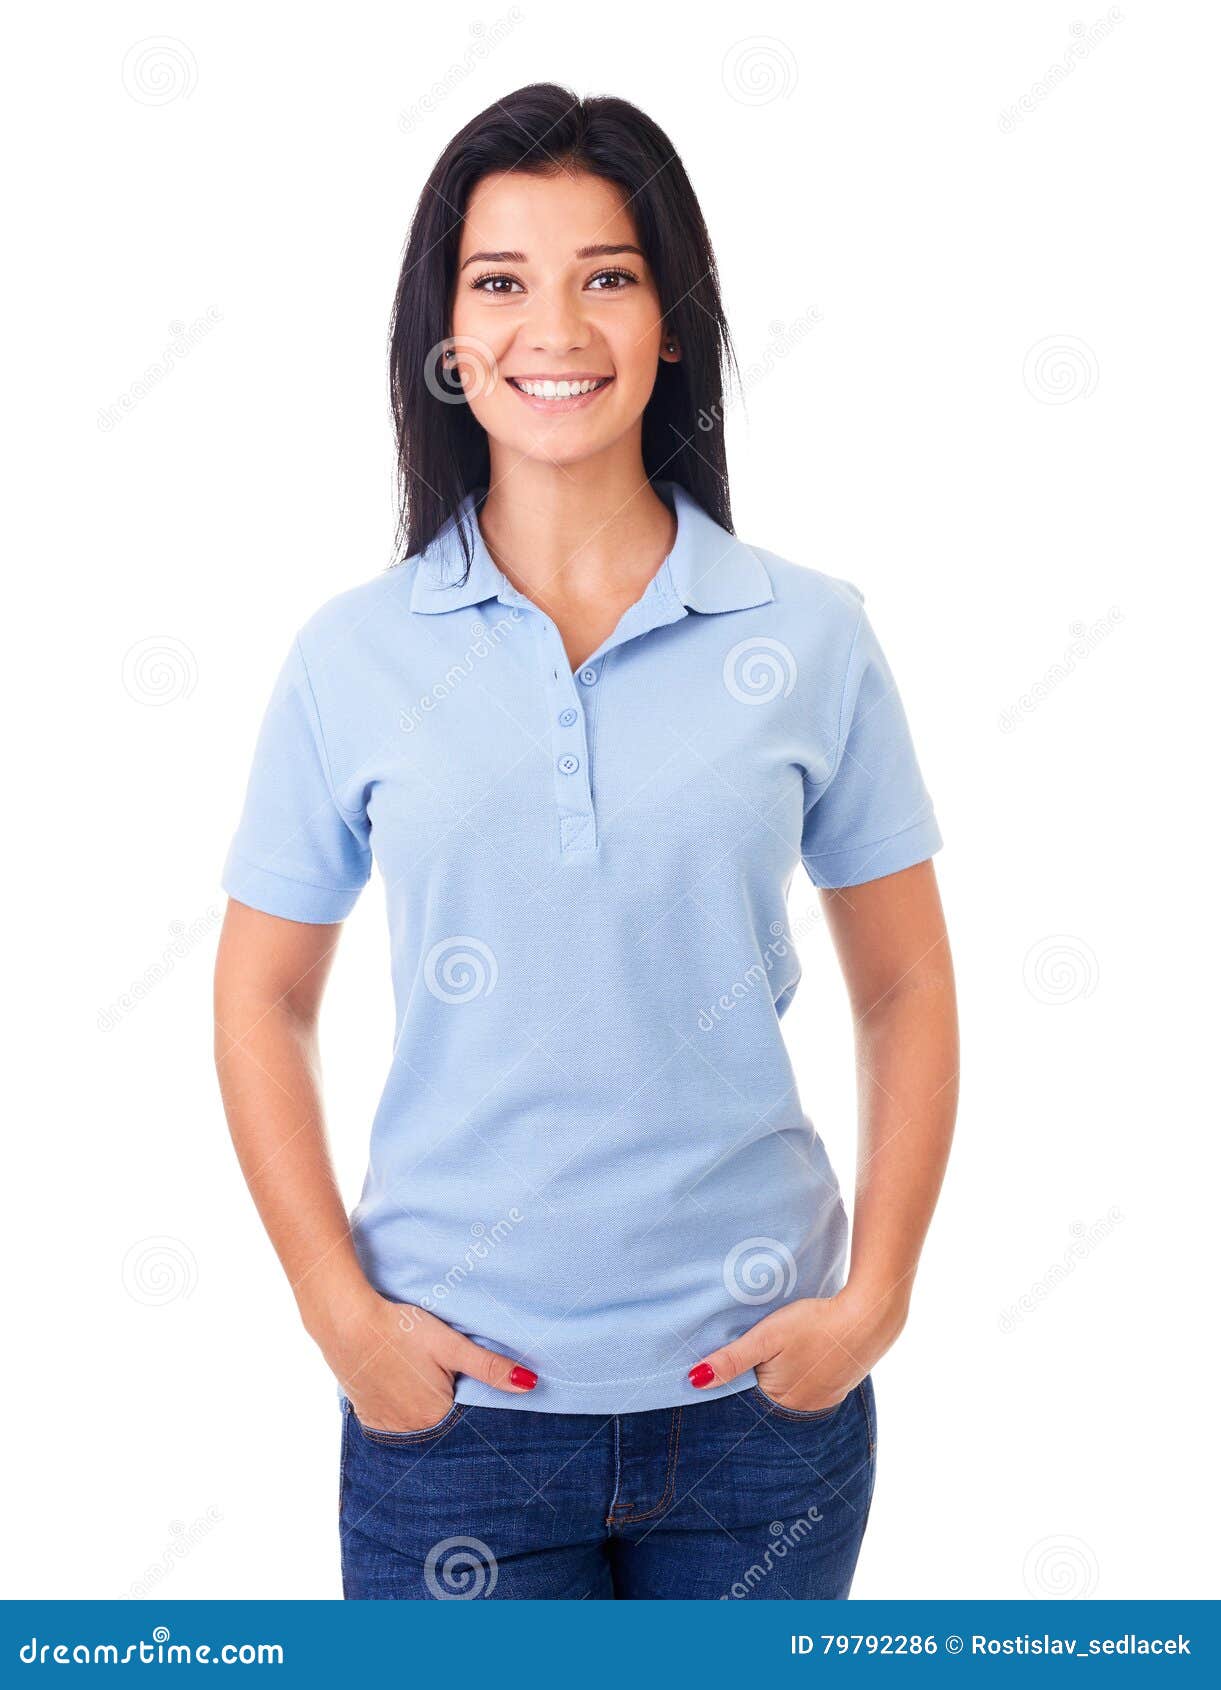 woman in blue polo shirt